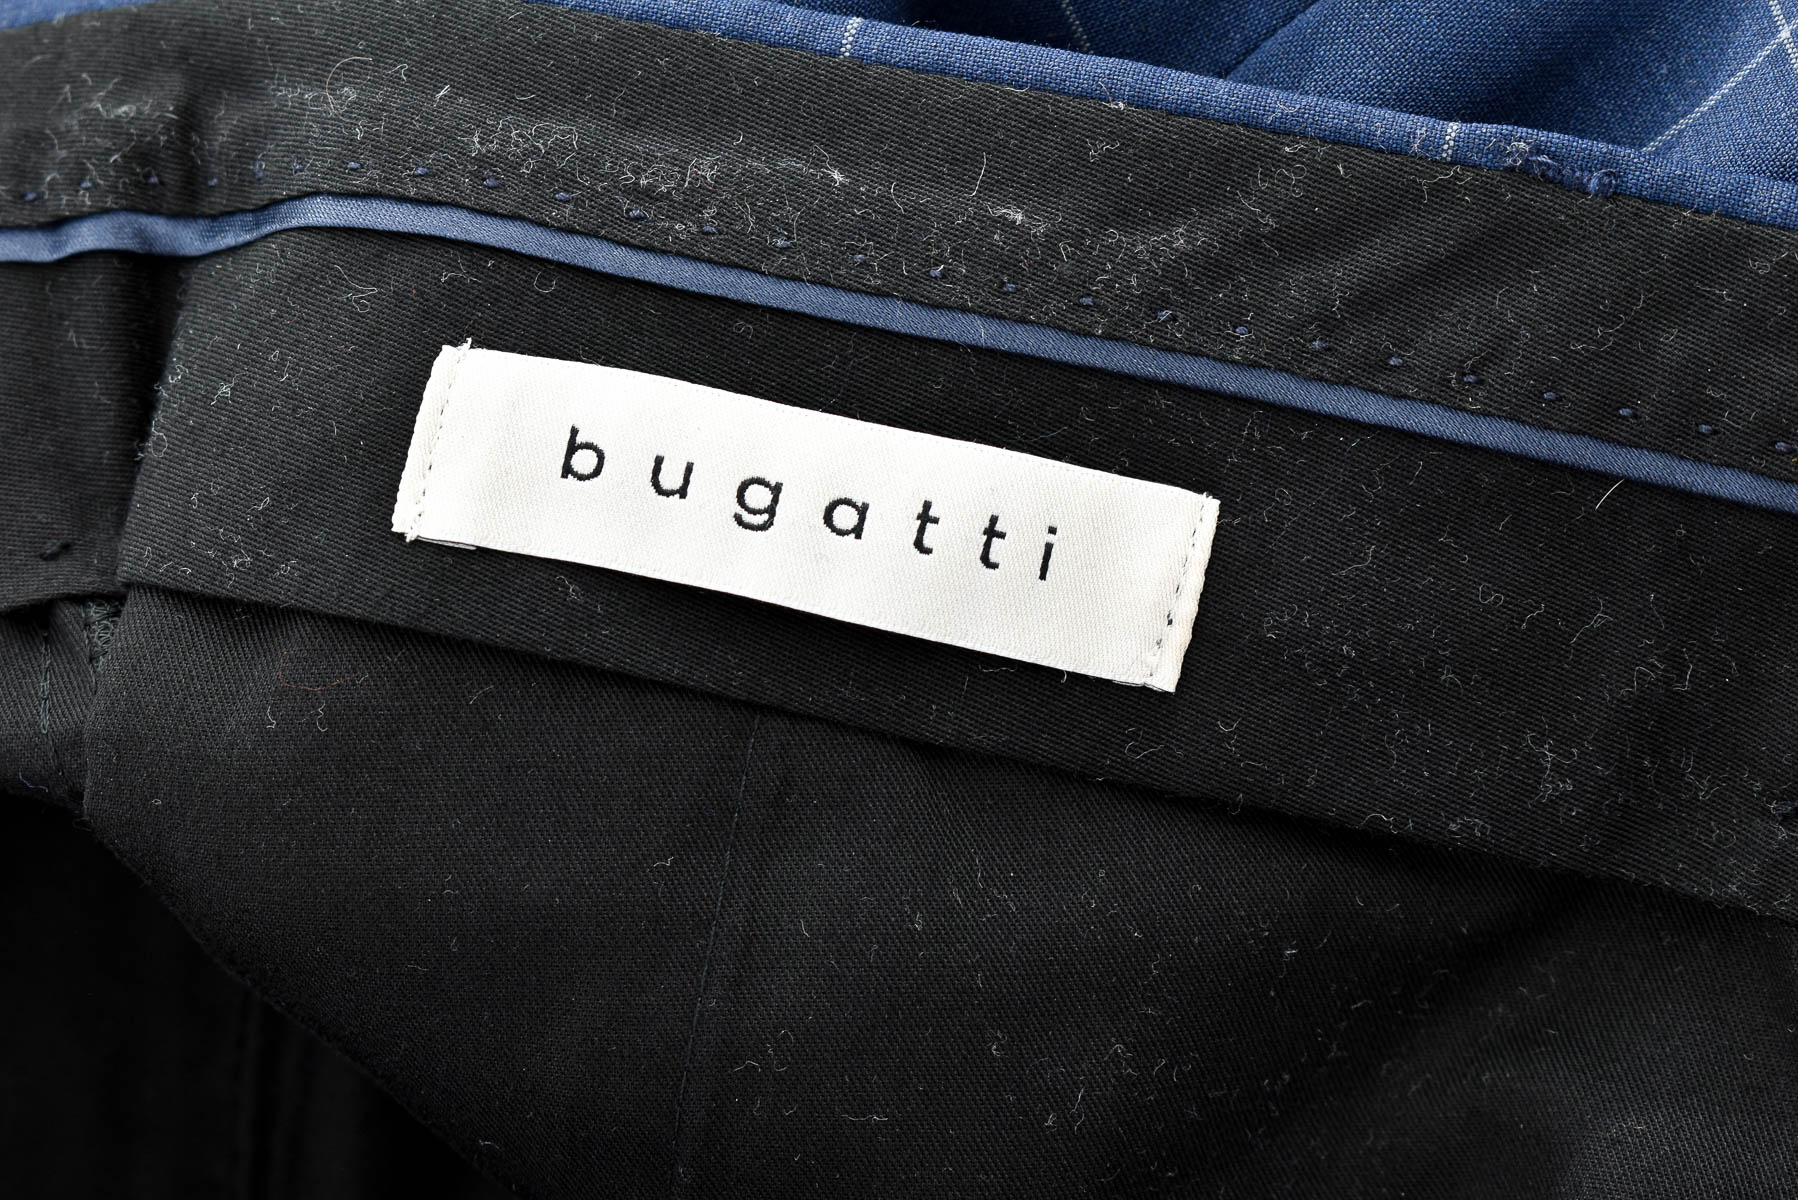 Men's trousers - Bugatti - 2